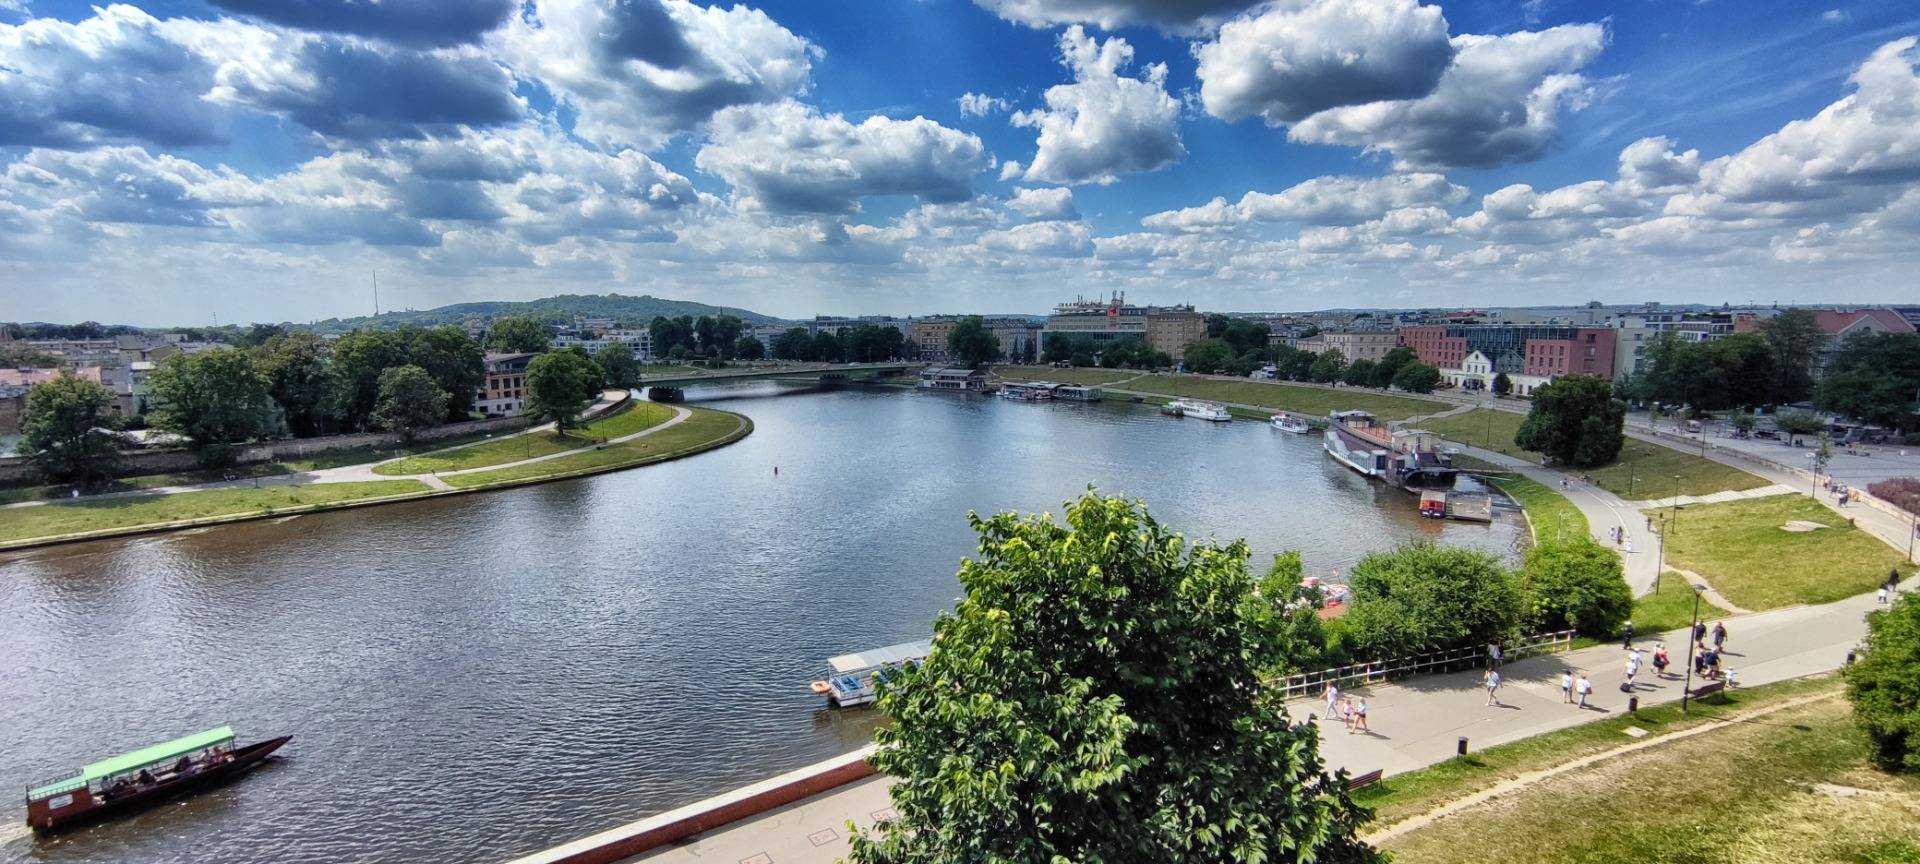 View to the Vistula